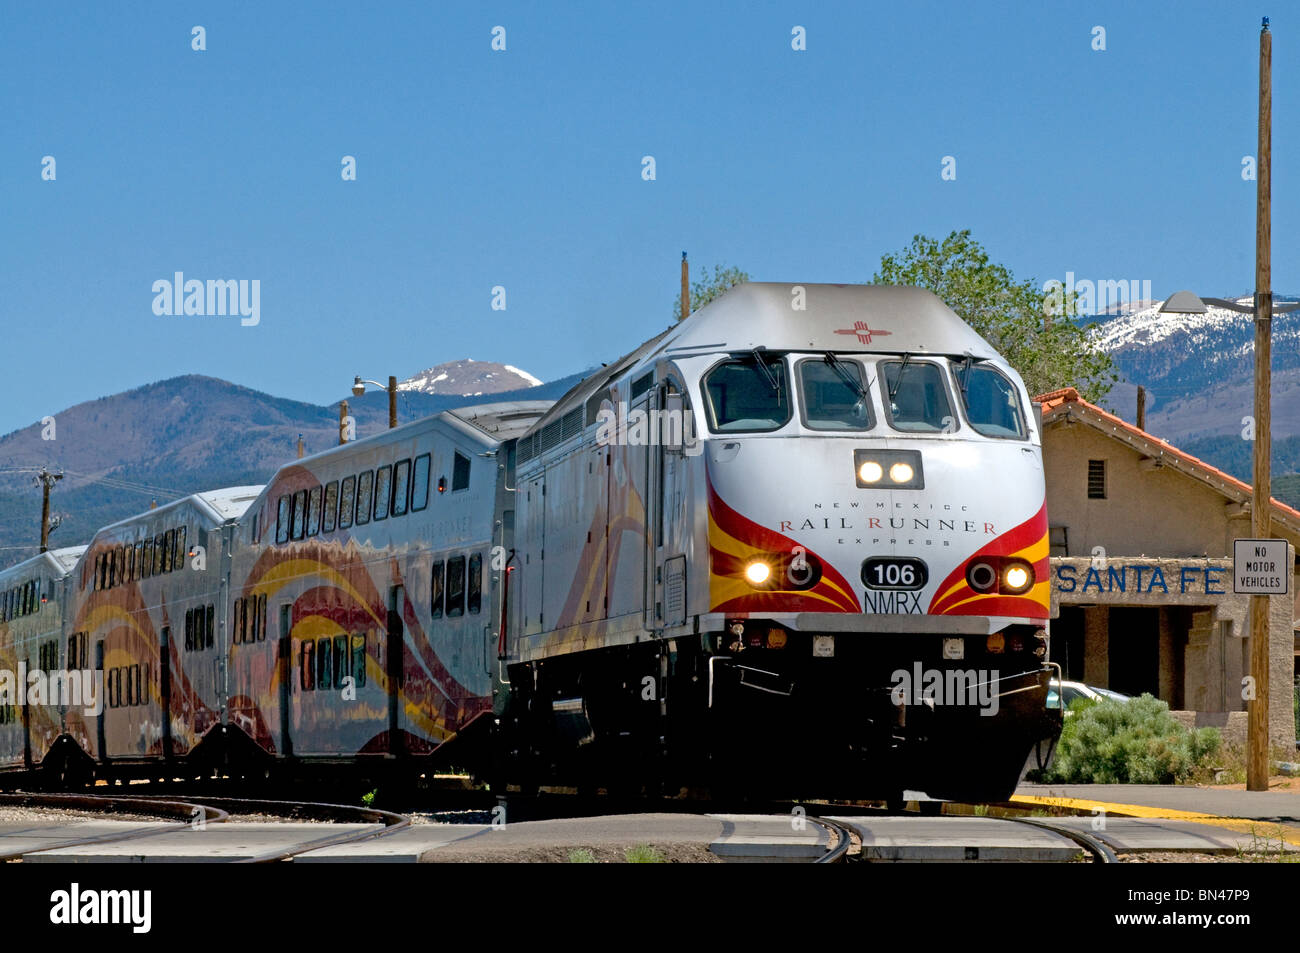 Railrunner train in Santa Fe New Mexico Stock Photo